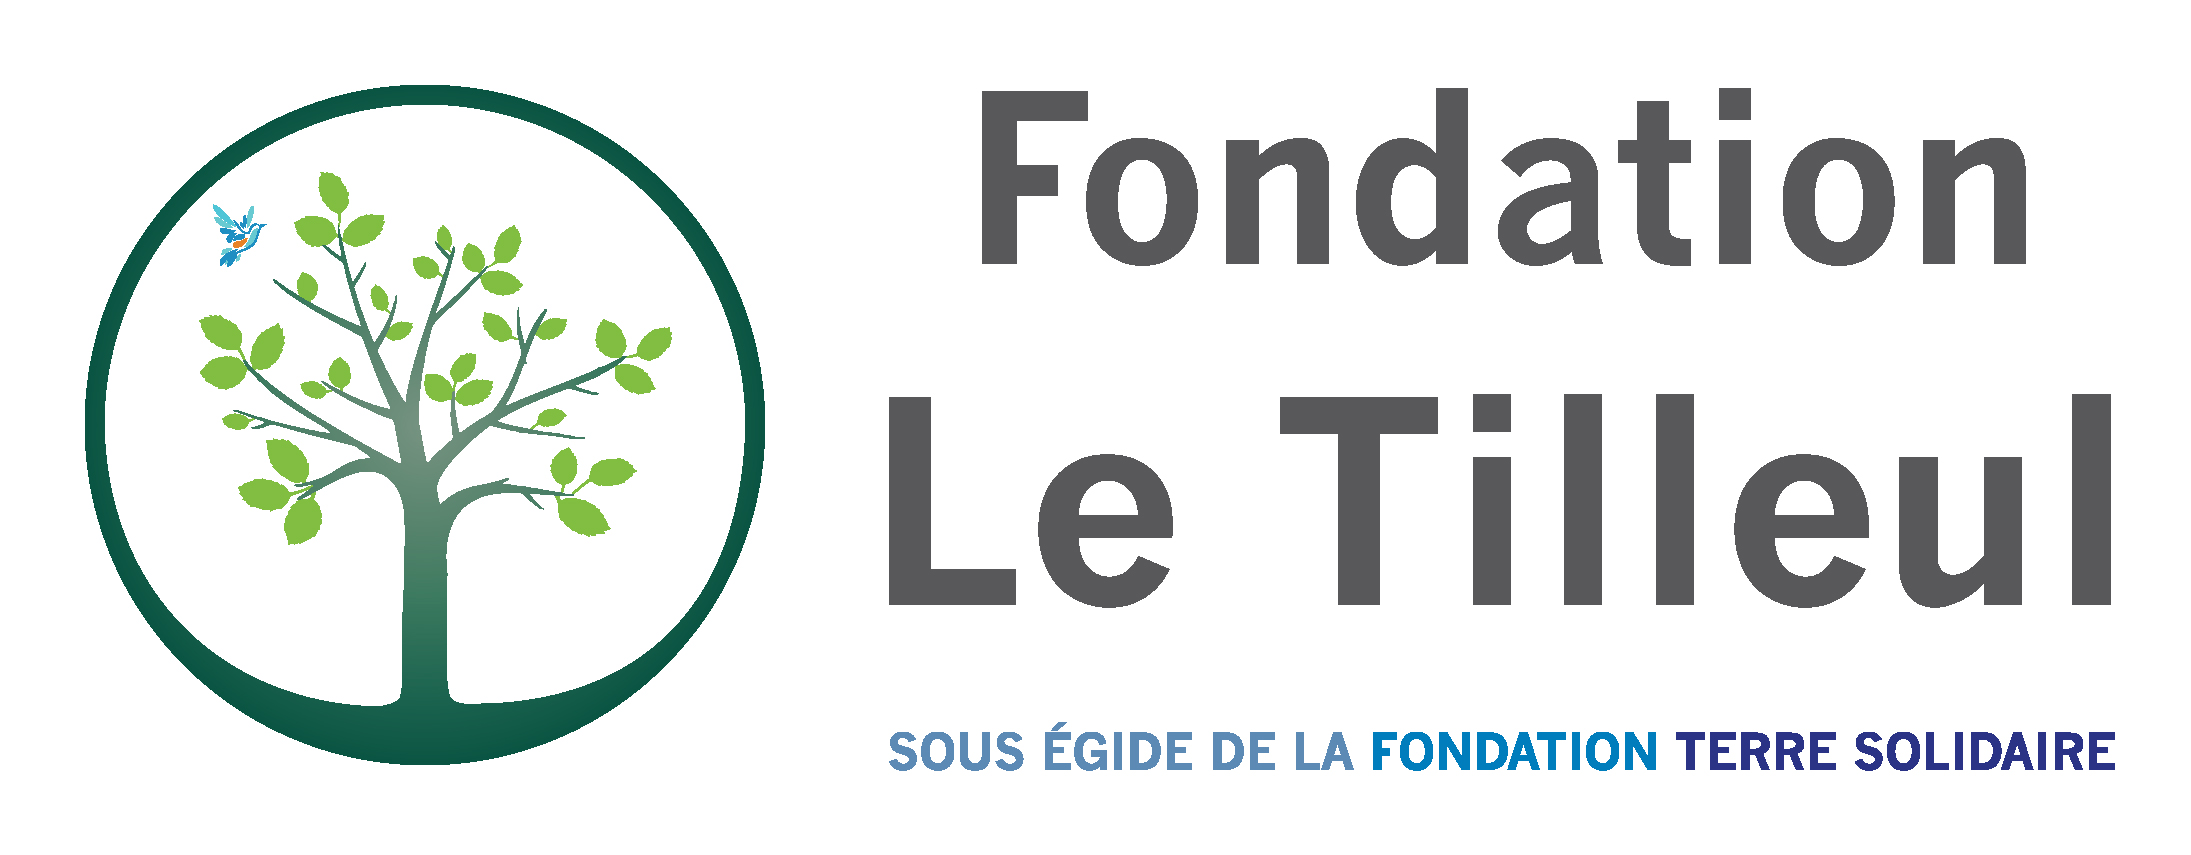 Logo-Fondation-Terre-Solidaire